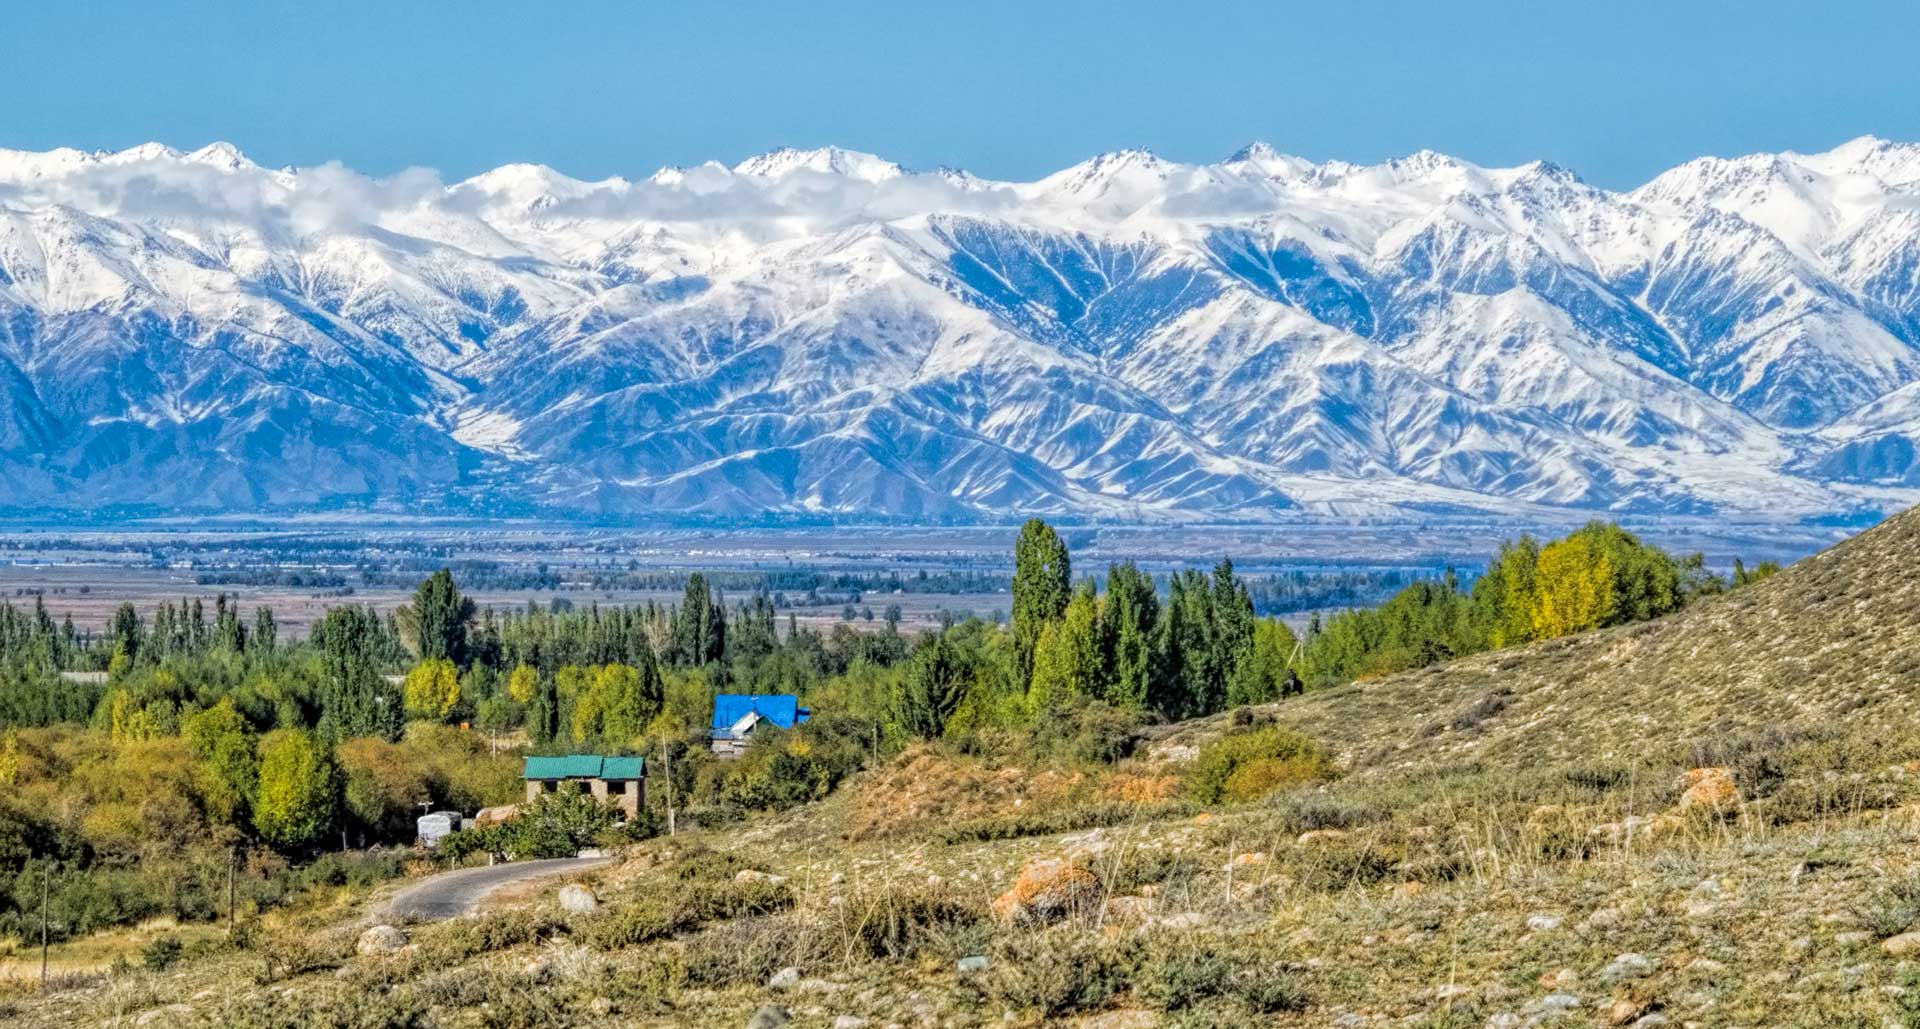 Ала тоо кыргызстан. Тянь-Шань Киргизия. Хребет Кунгей ала-ТОО. Киргизия горы Иссык-Куль Тянь-Шань. Предгорье Тянь-Шаня Киргизия.